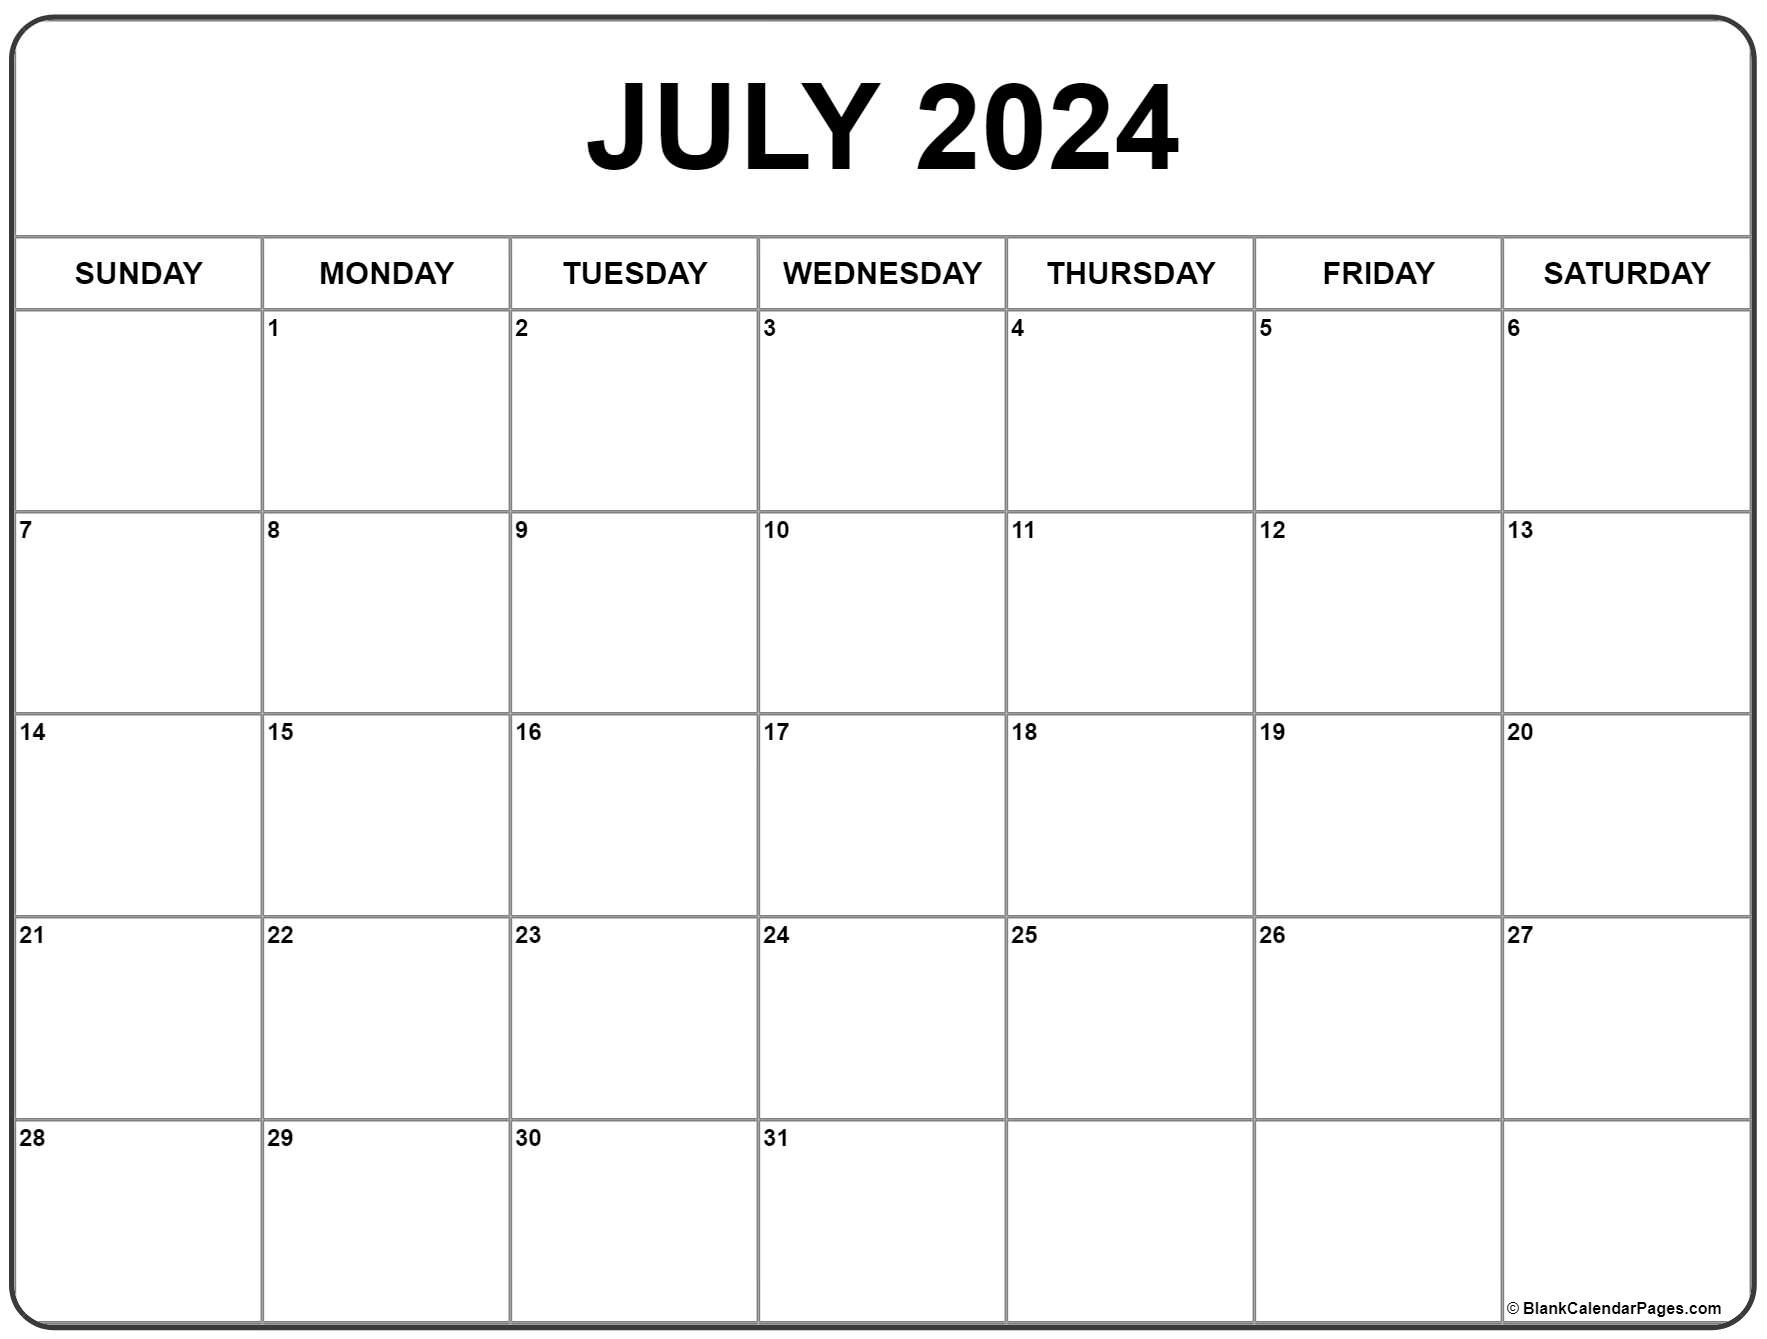 July 2024 Calendar | Free Printable Calendar for 2024 July Calendar Printable